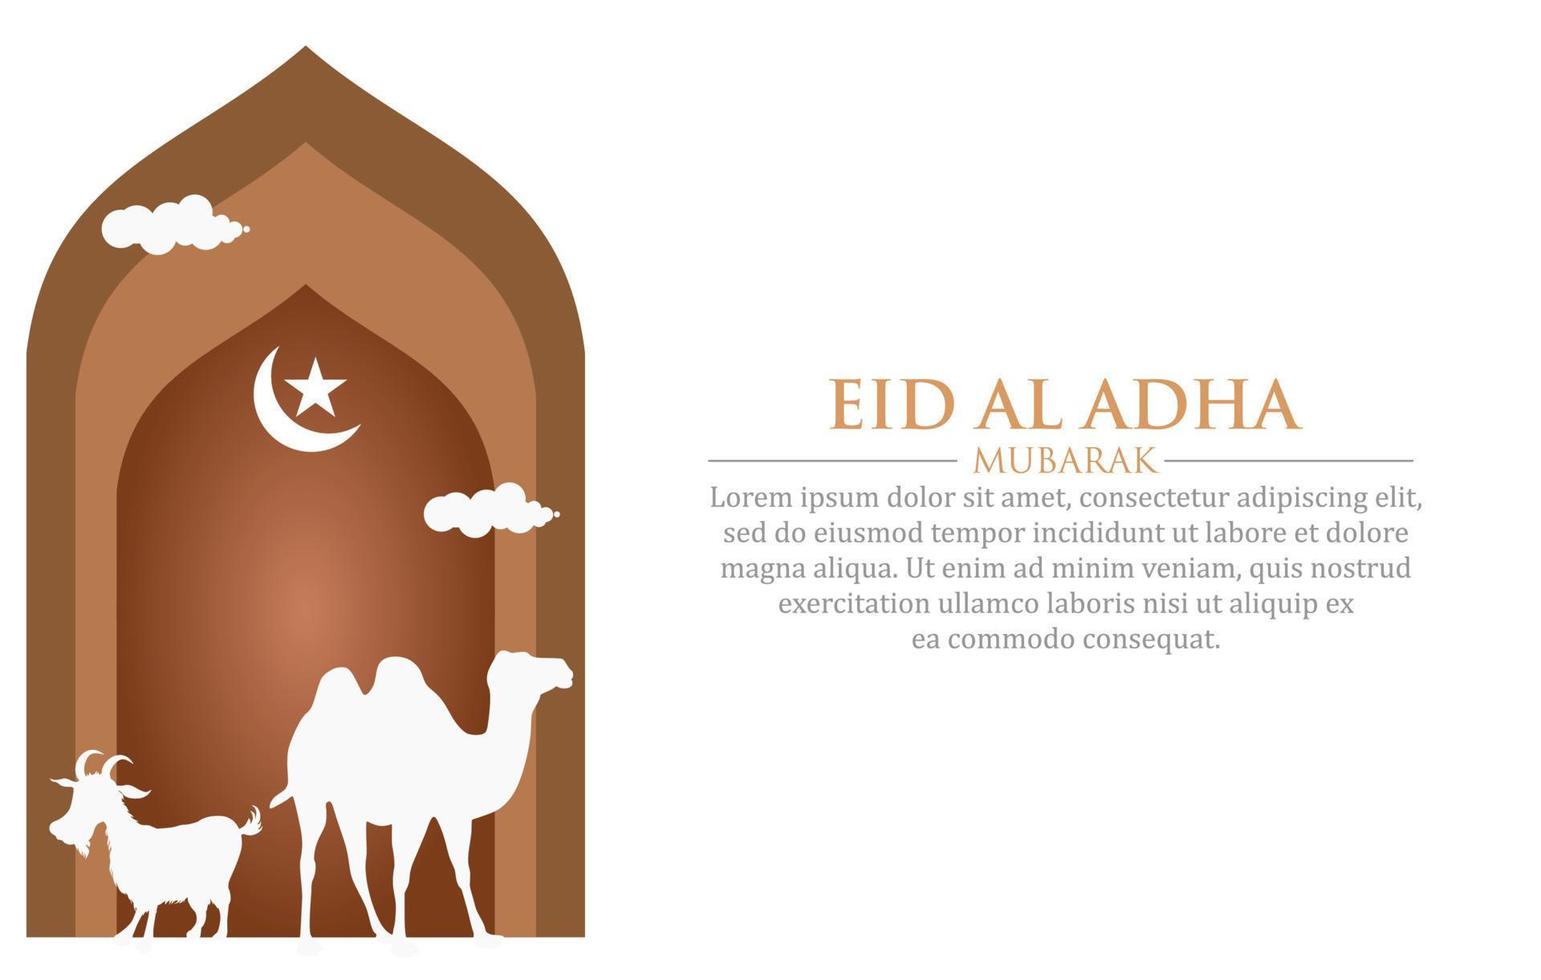 eid al adha background banner paper cut style vector